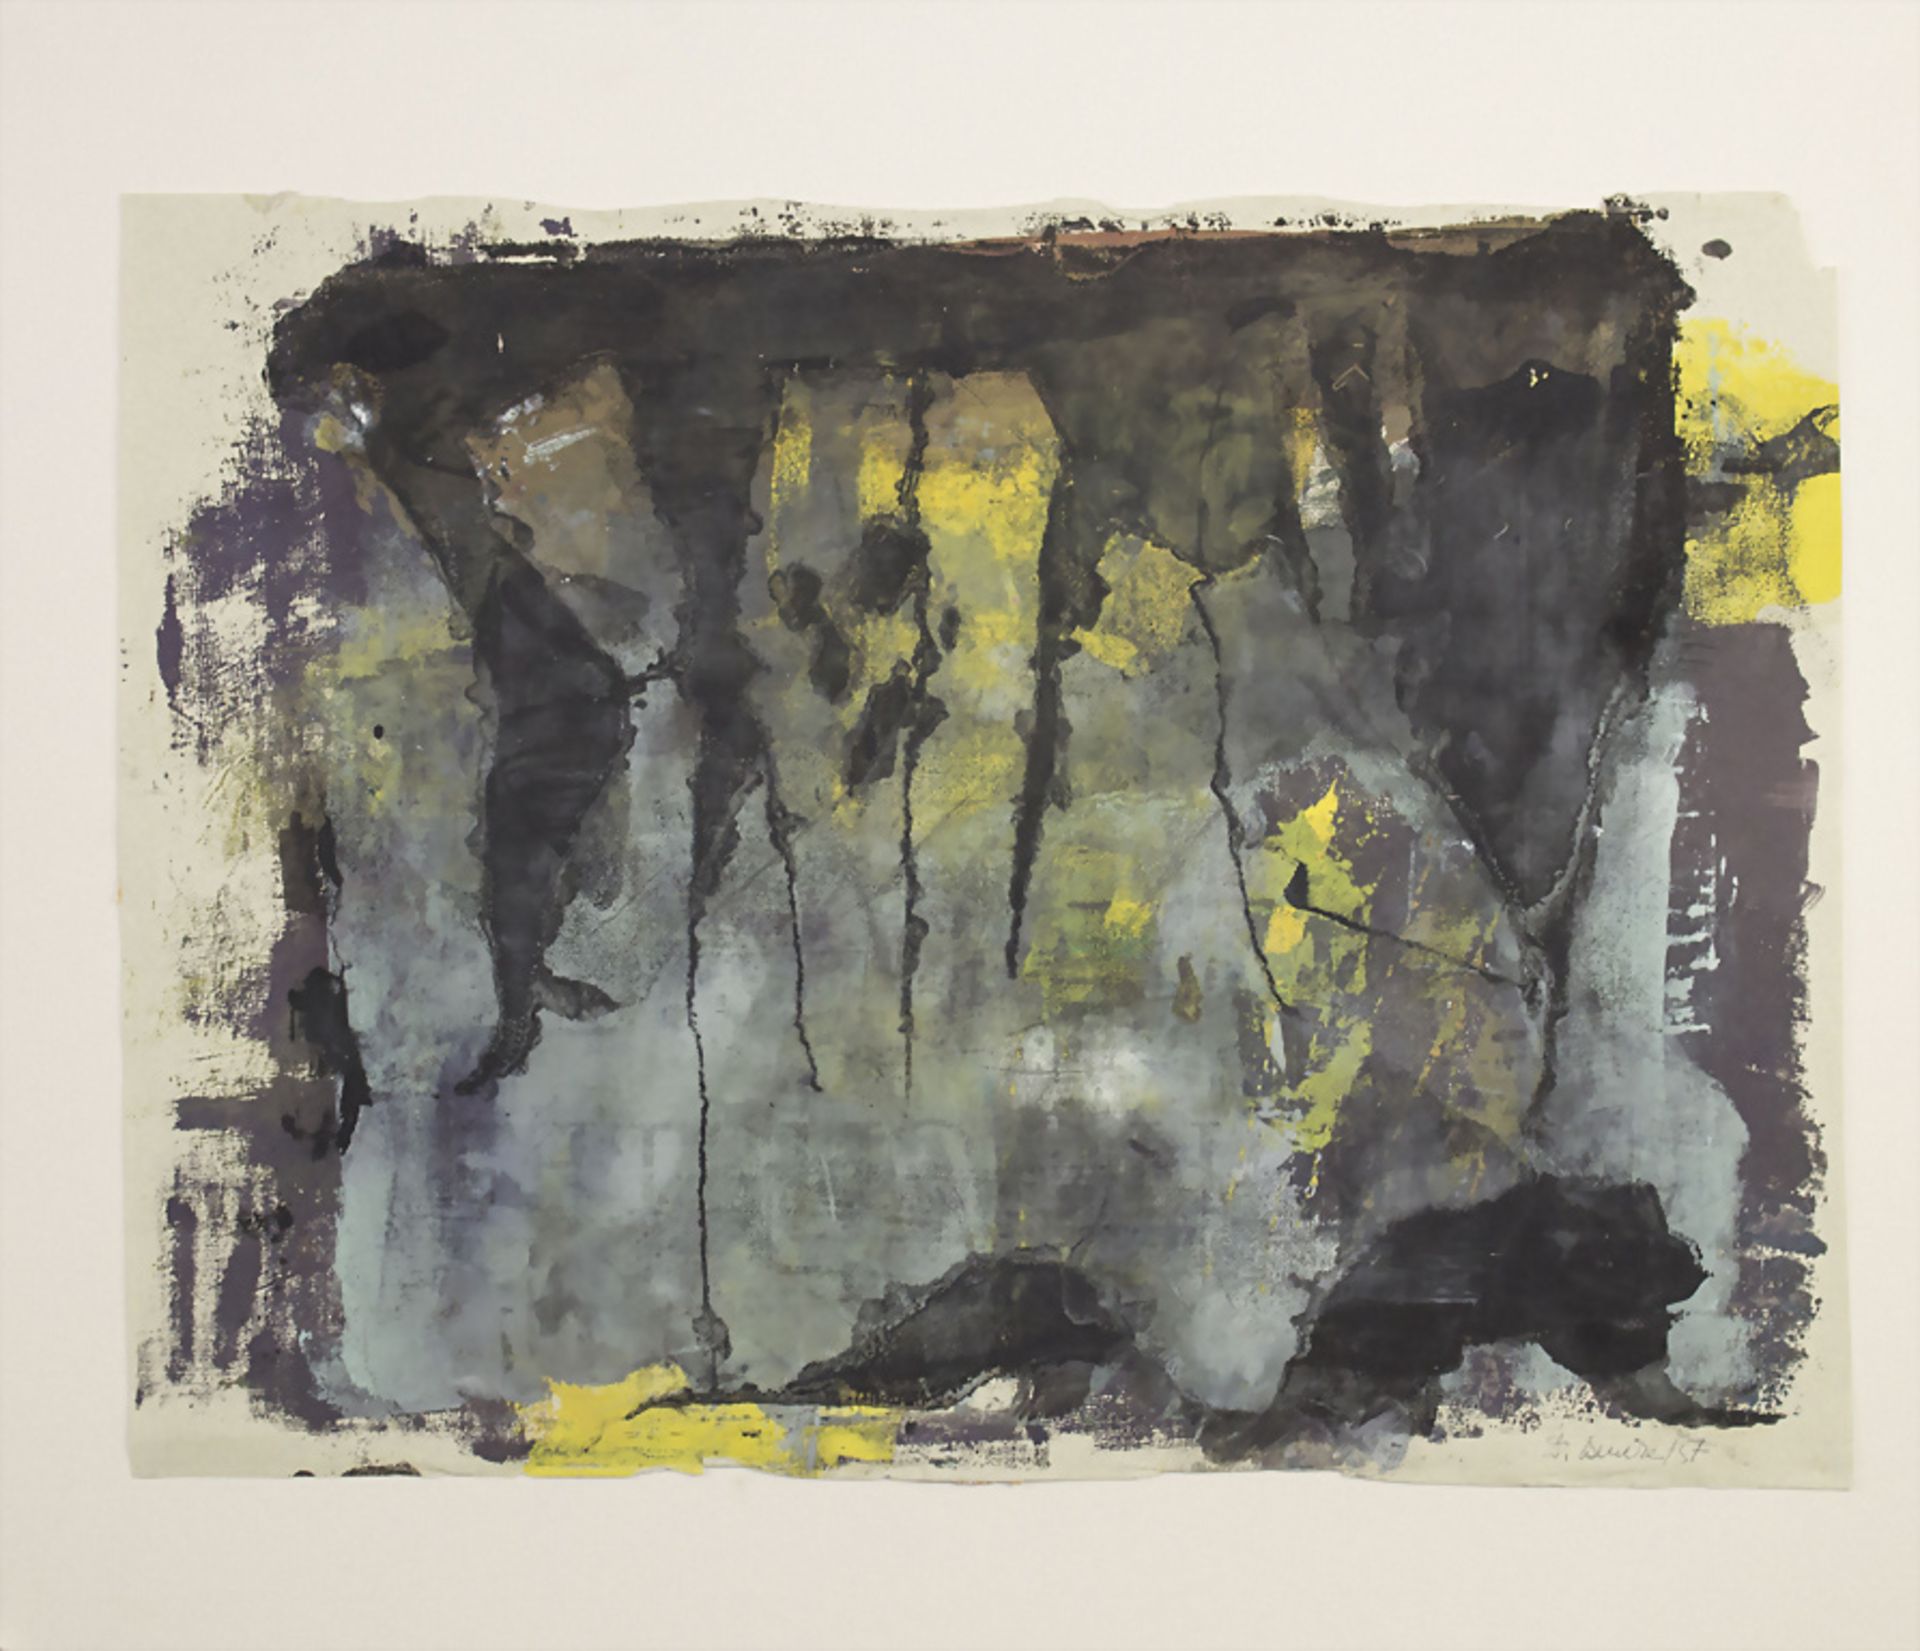 Dieter BENECKE (*1928), 'Abstraktion in Schwarz-Gelb' / 'Abstraction in black and yellow', 1957